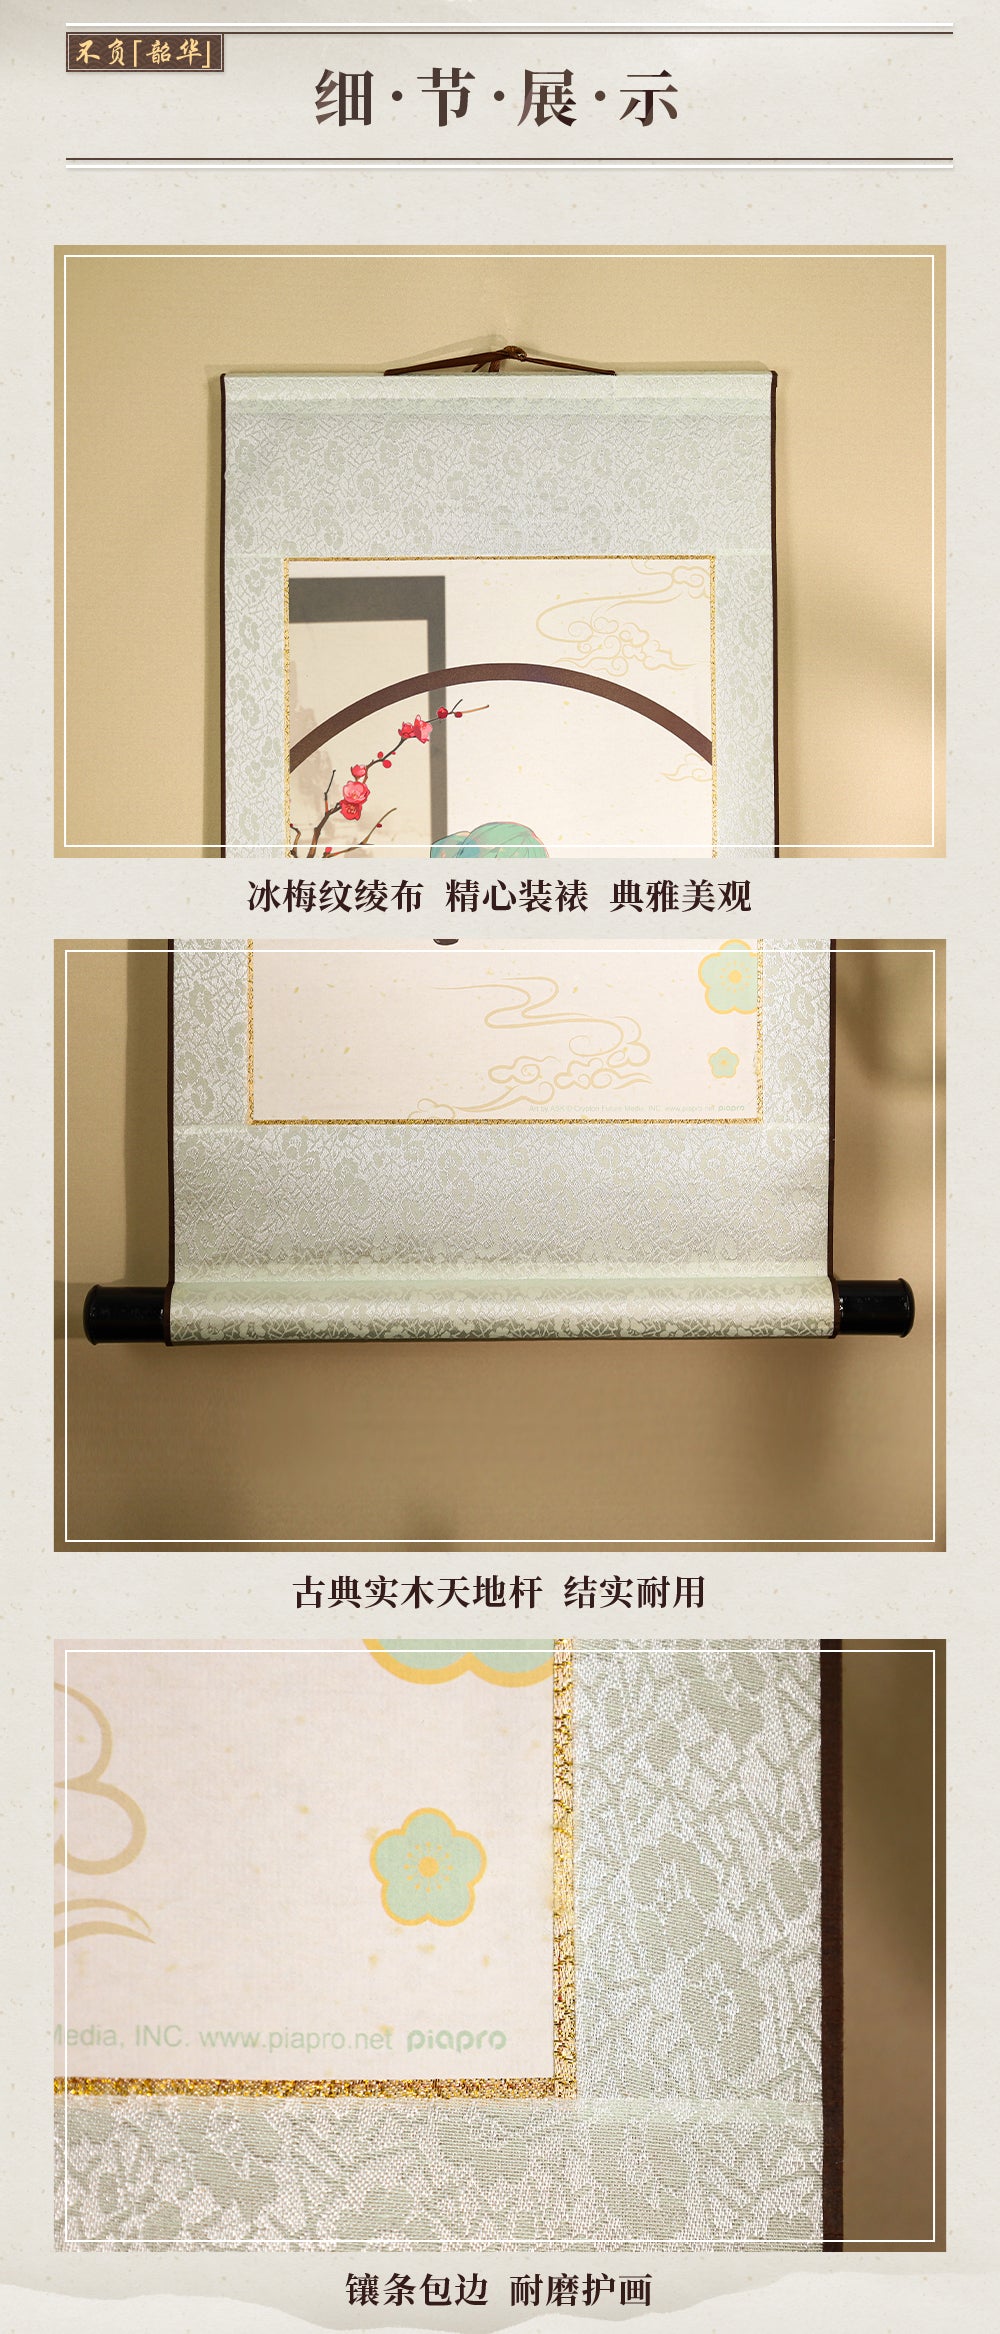 Hatsune Miku - Shao Hua - Premium Wall Scroll